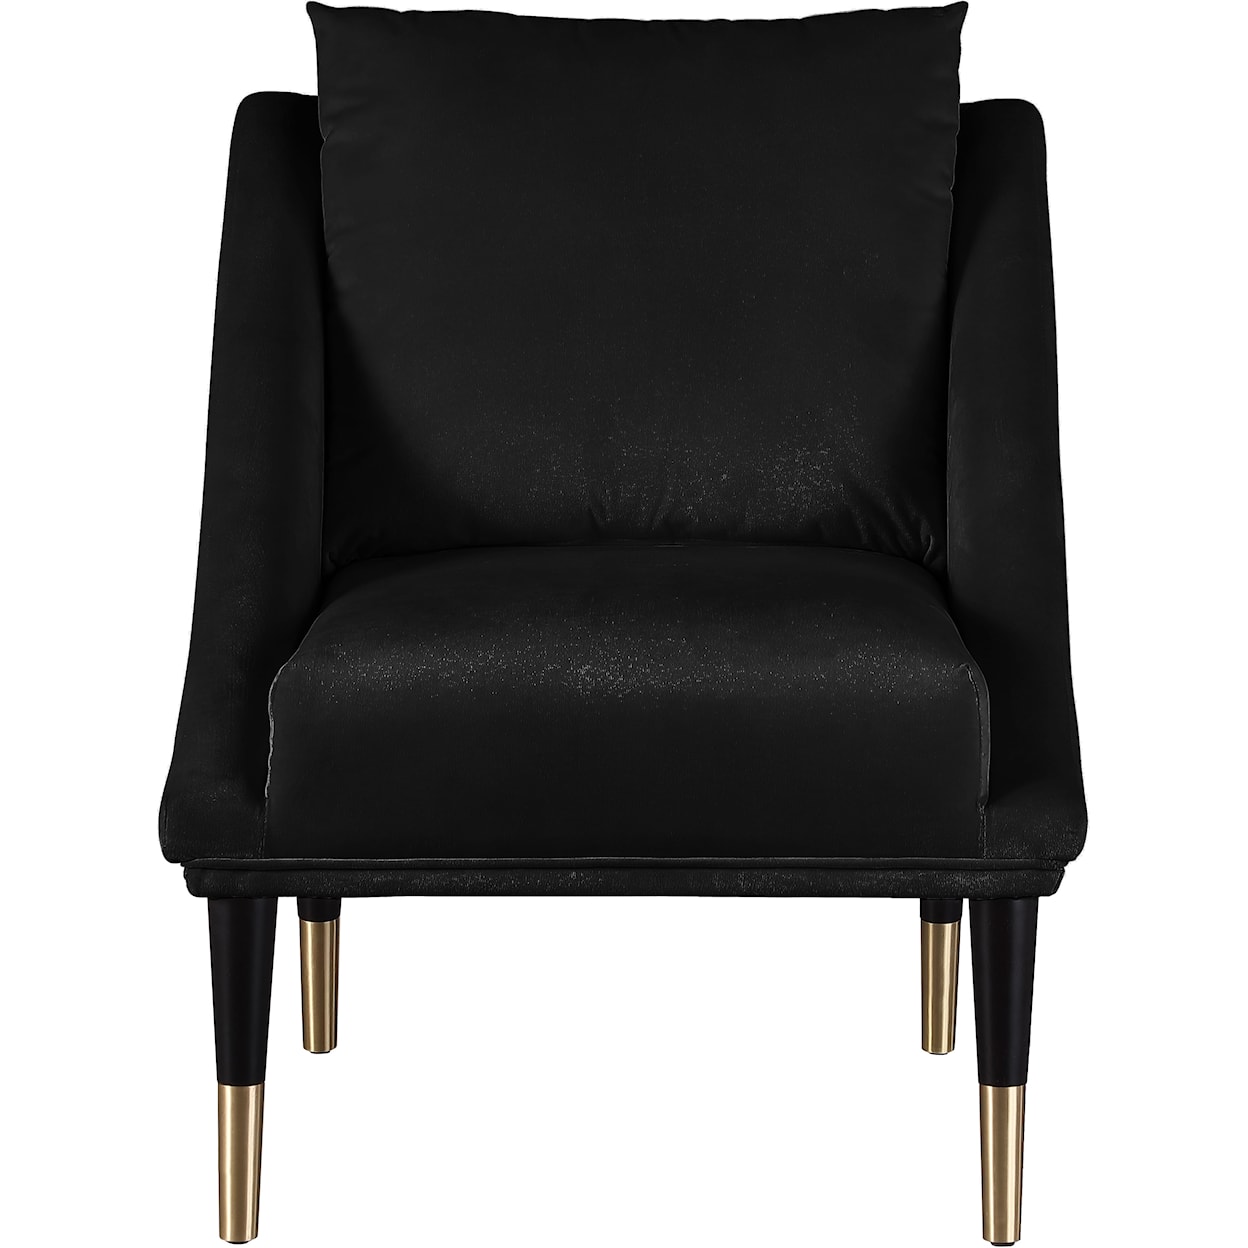 Meridian Furniture Elegante Accent Chair